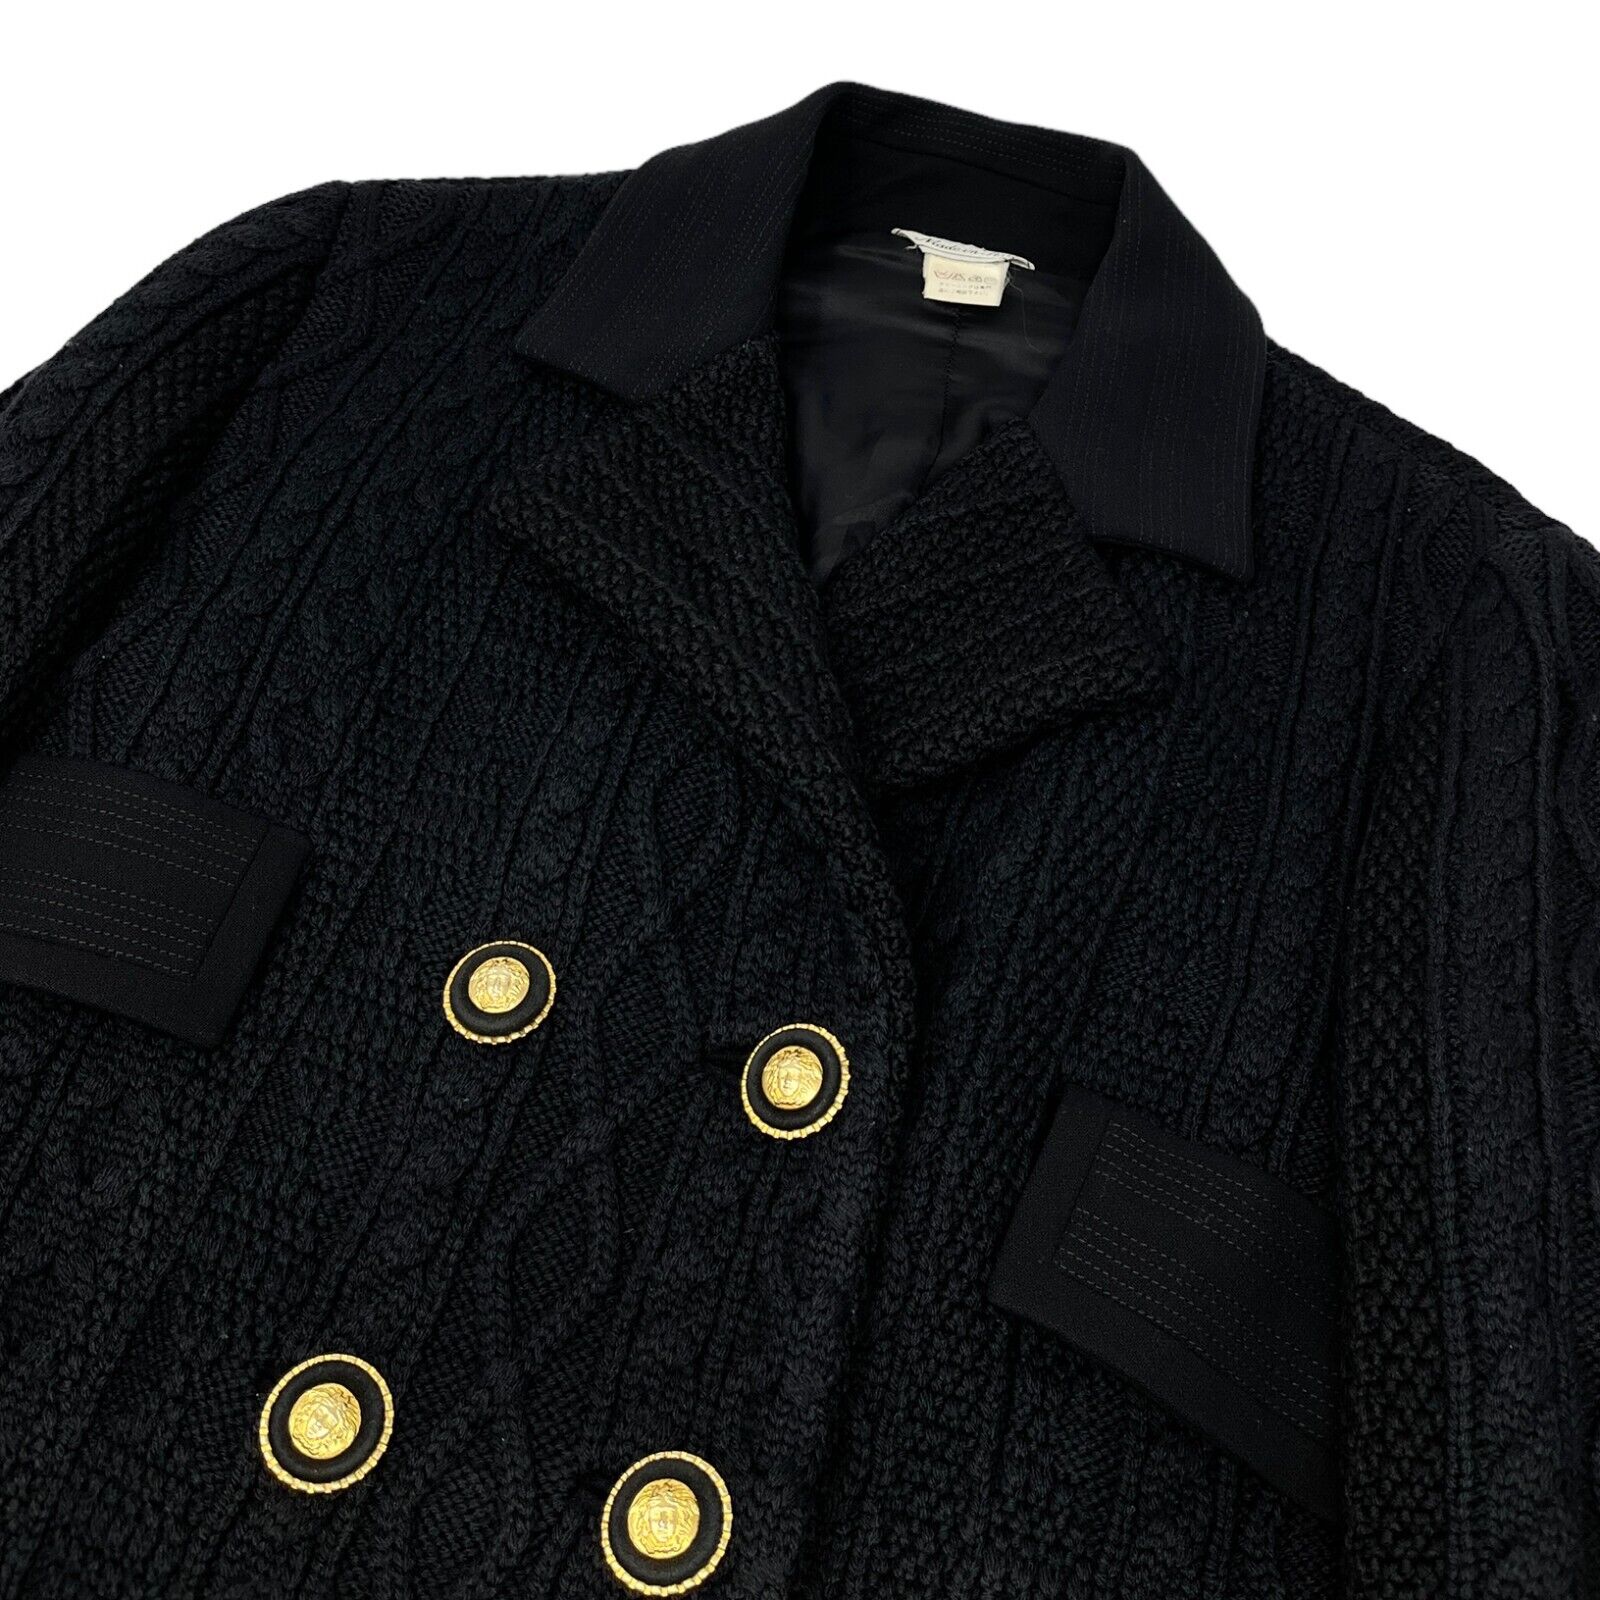 GIANNI VERSACE Vintage Medusa Logo Button Knit Jacket #44 Black Gold Rank AB+